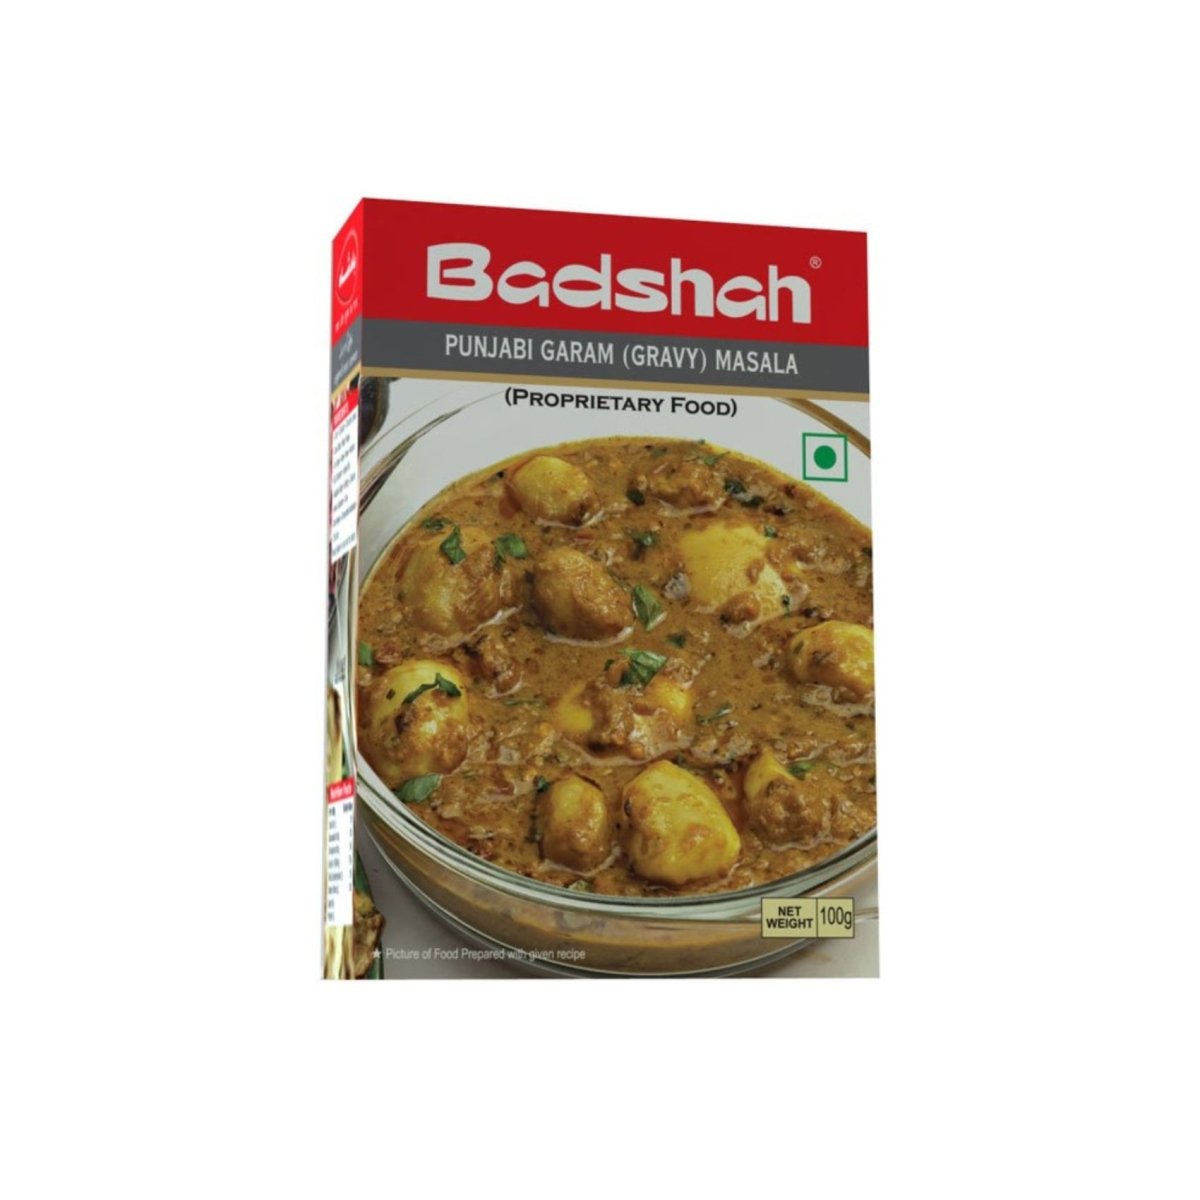 Badshah Punjabi Garam Masala - Tulsidas